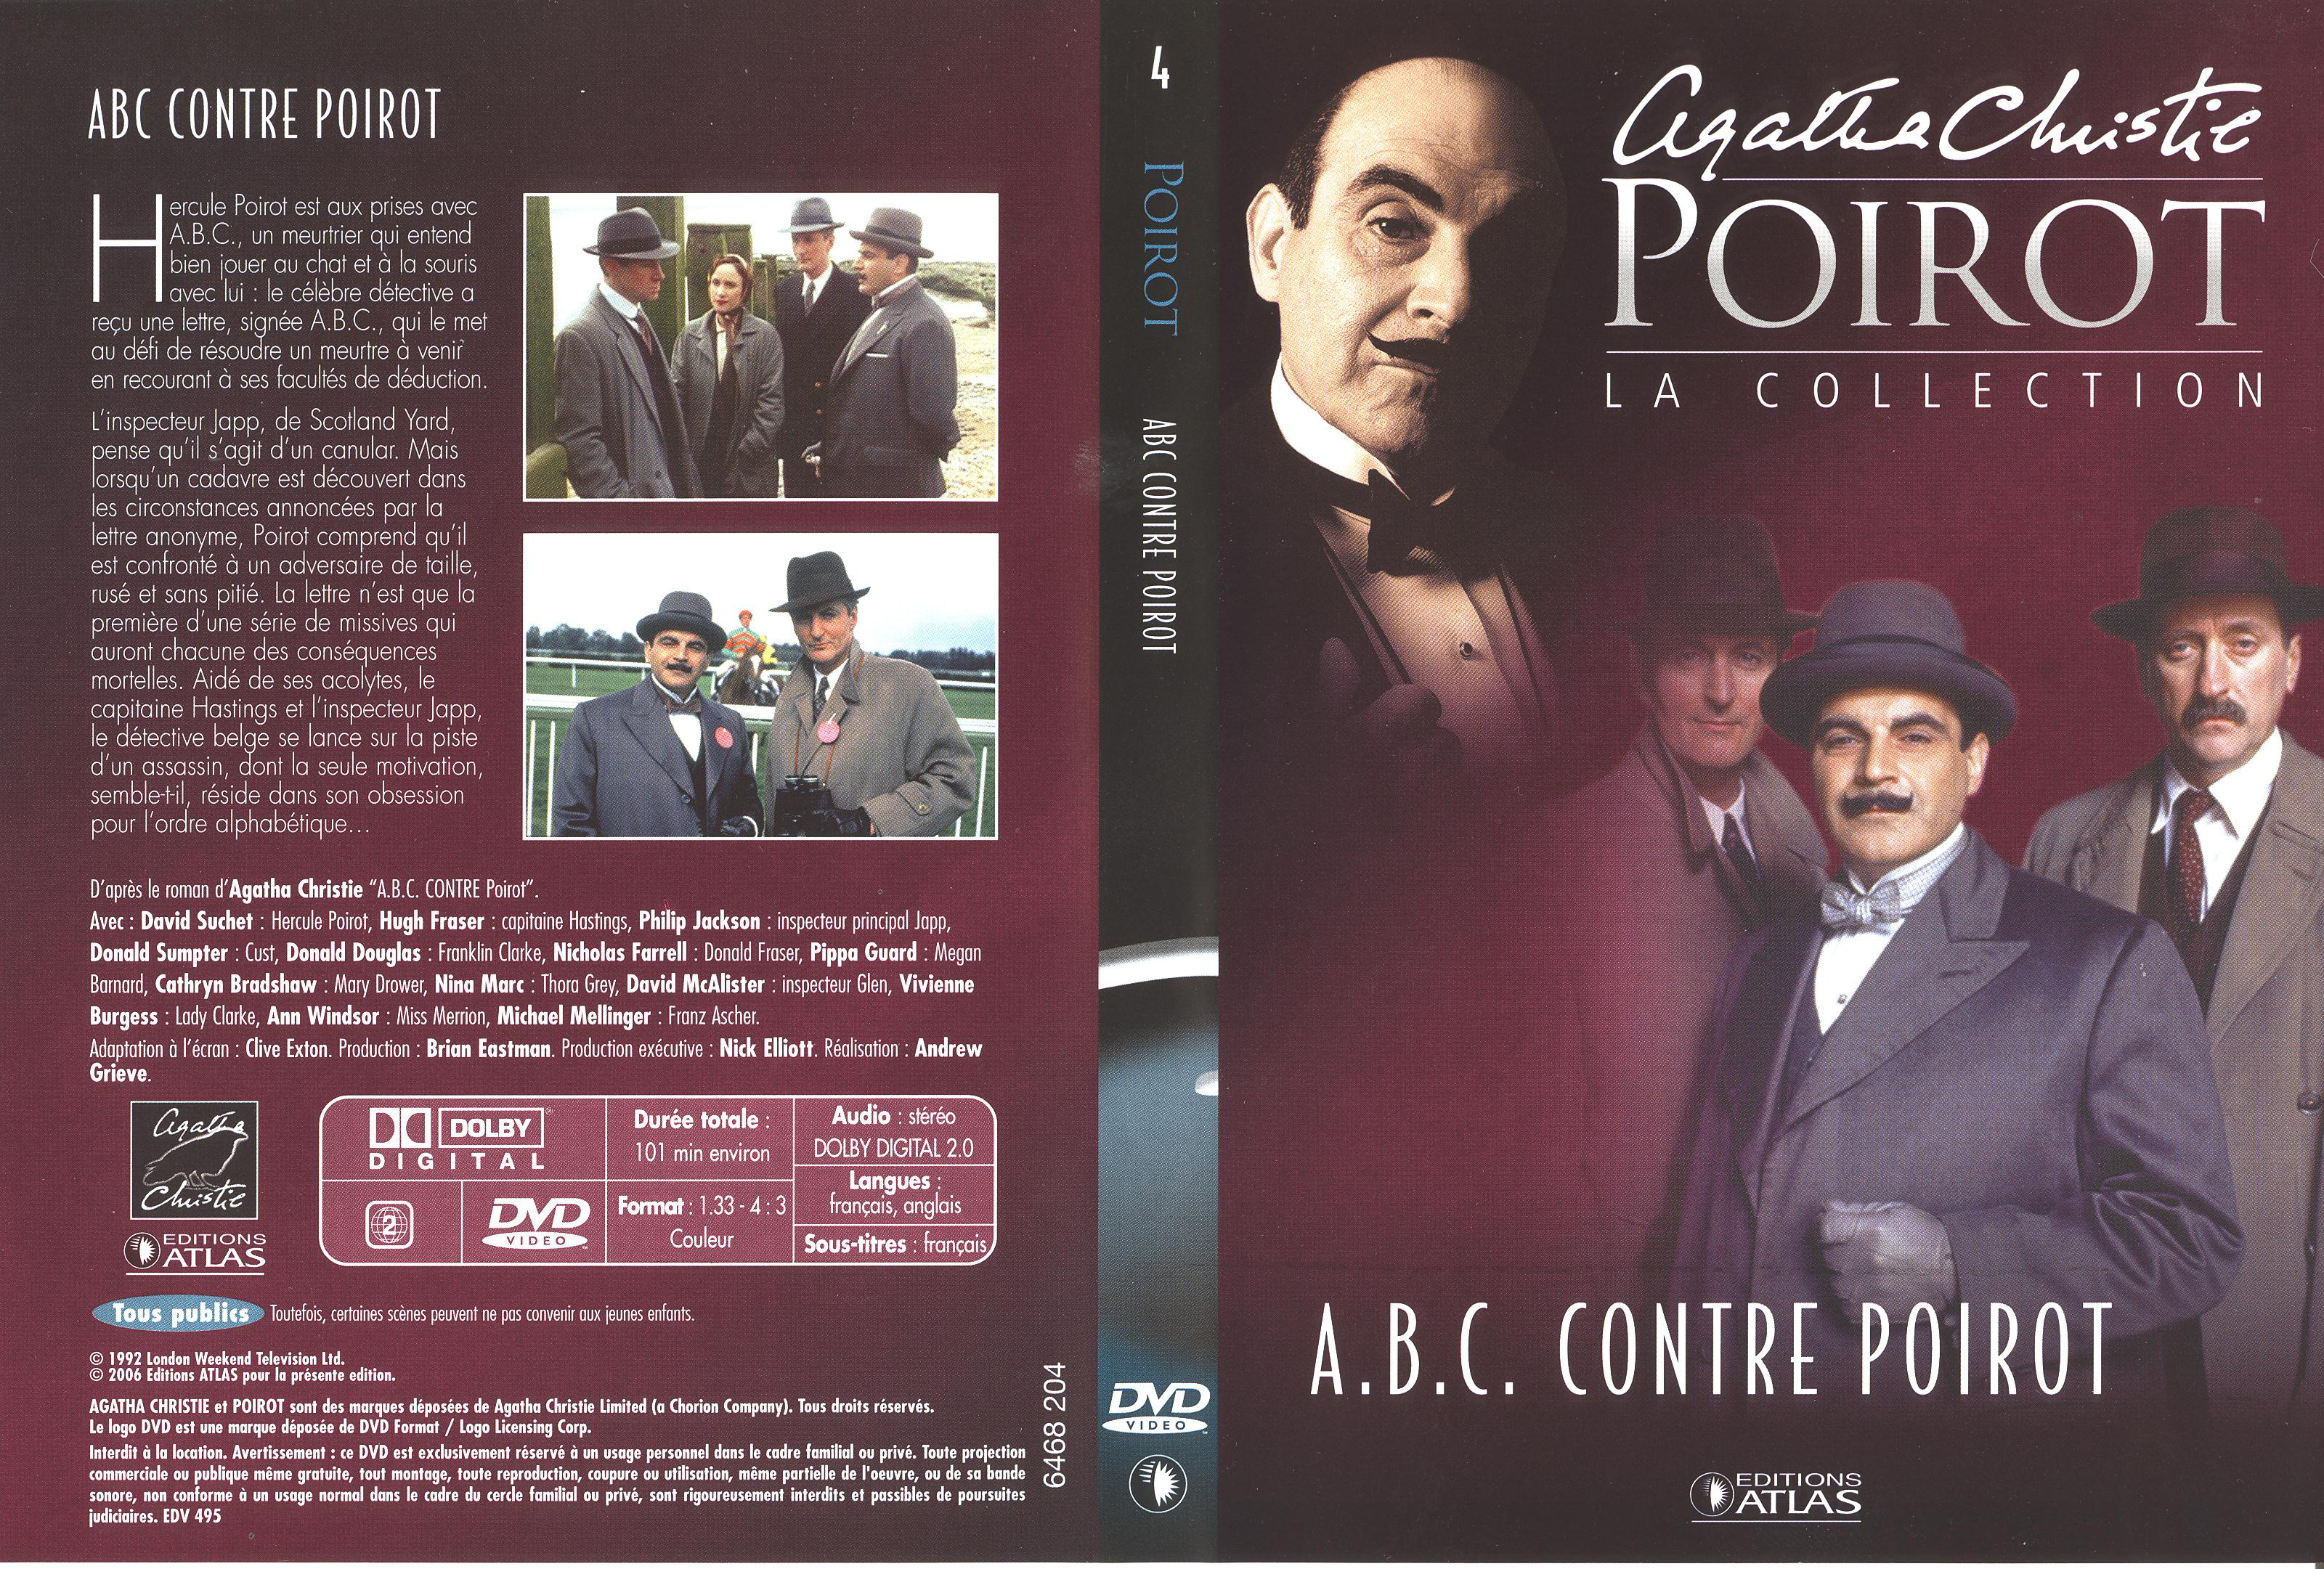 Jaquette DVD Hercule Poirot vol 4